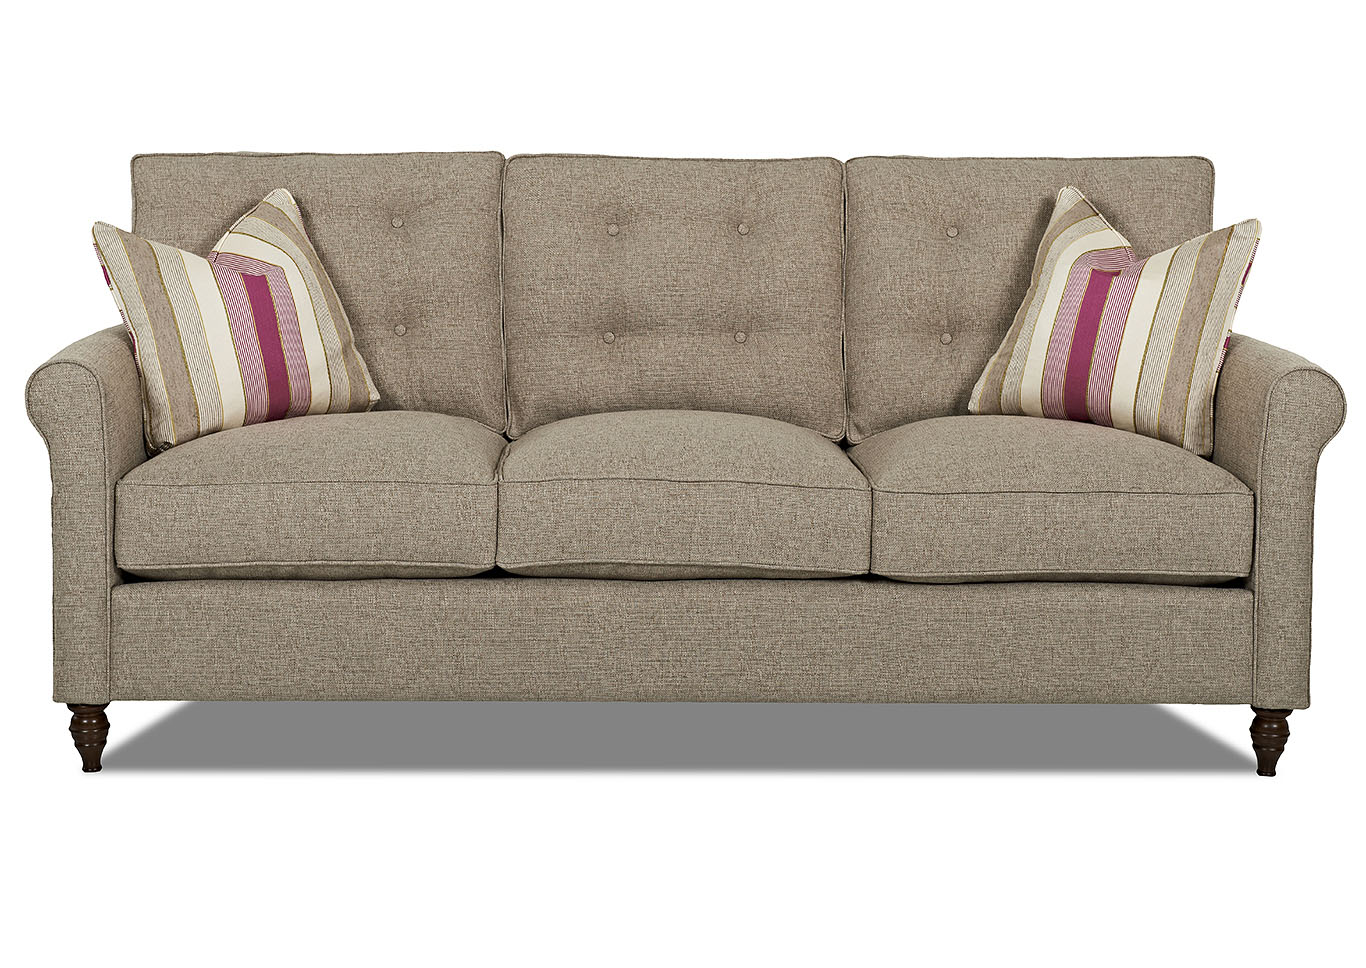 Holland Brown Stationary Fabric Sofa,Klaussner Home Furnishings